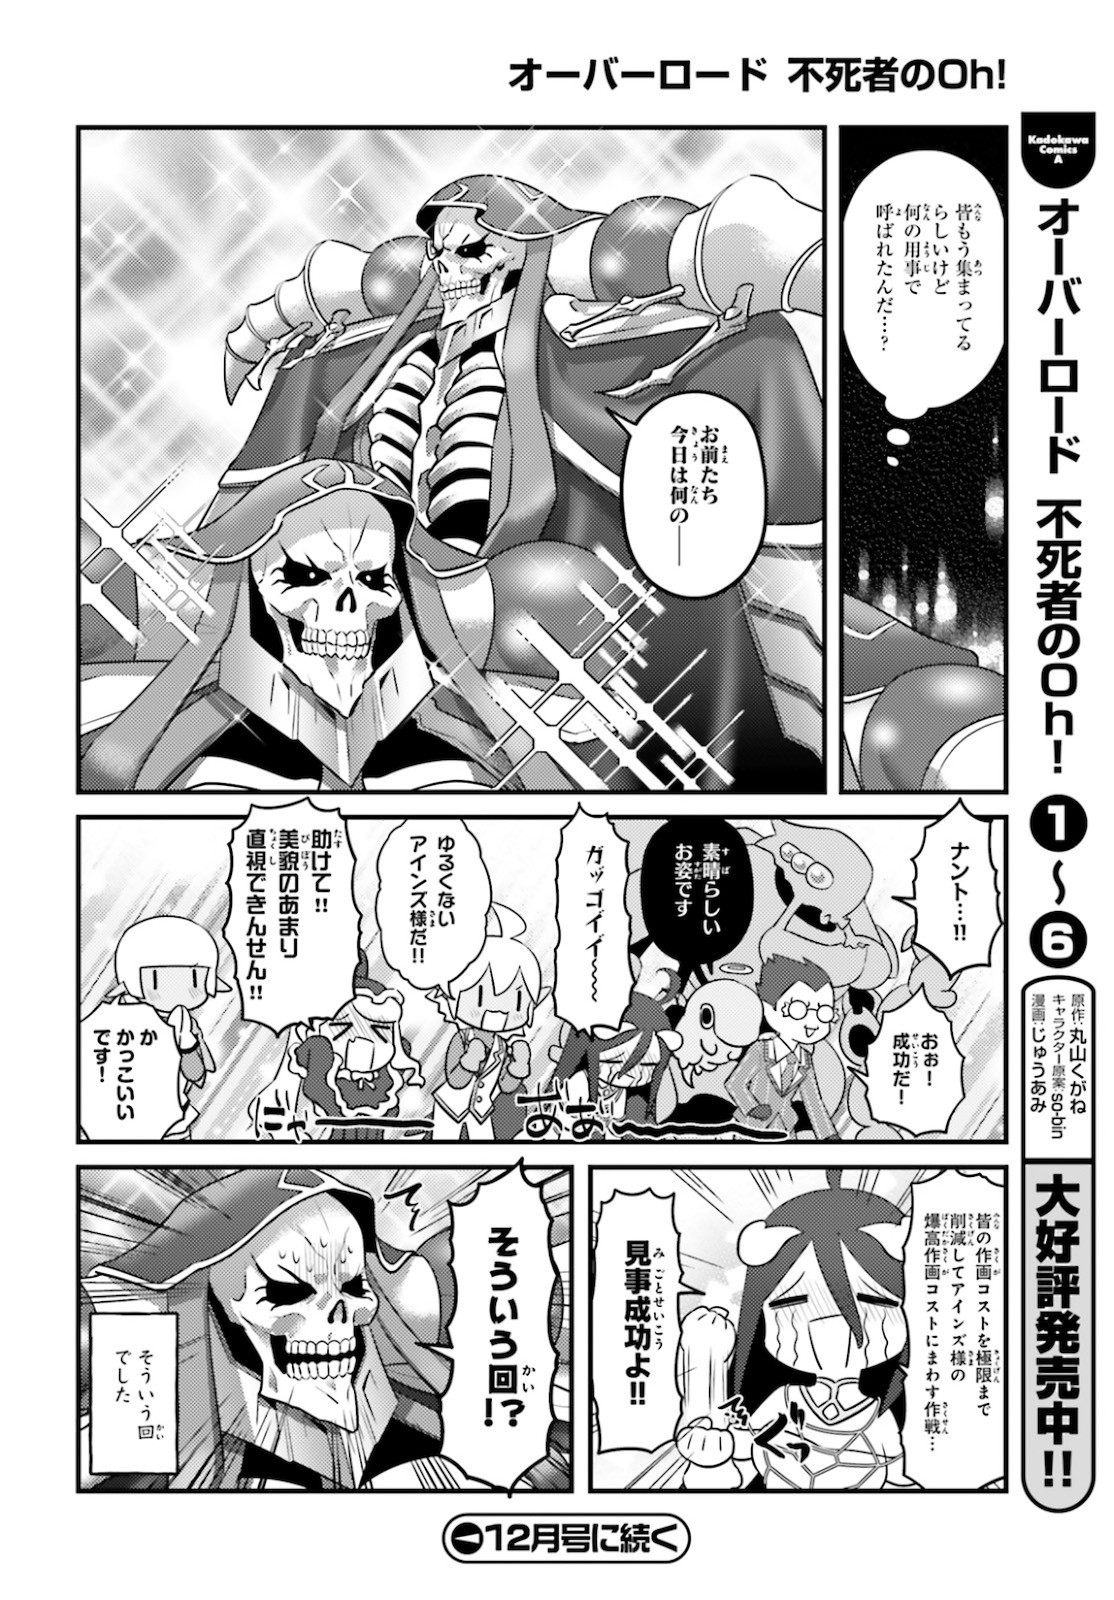 Overlord-Fushisha-no-Oh - Chapter 42 - Page 20